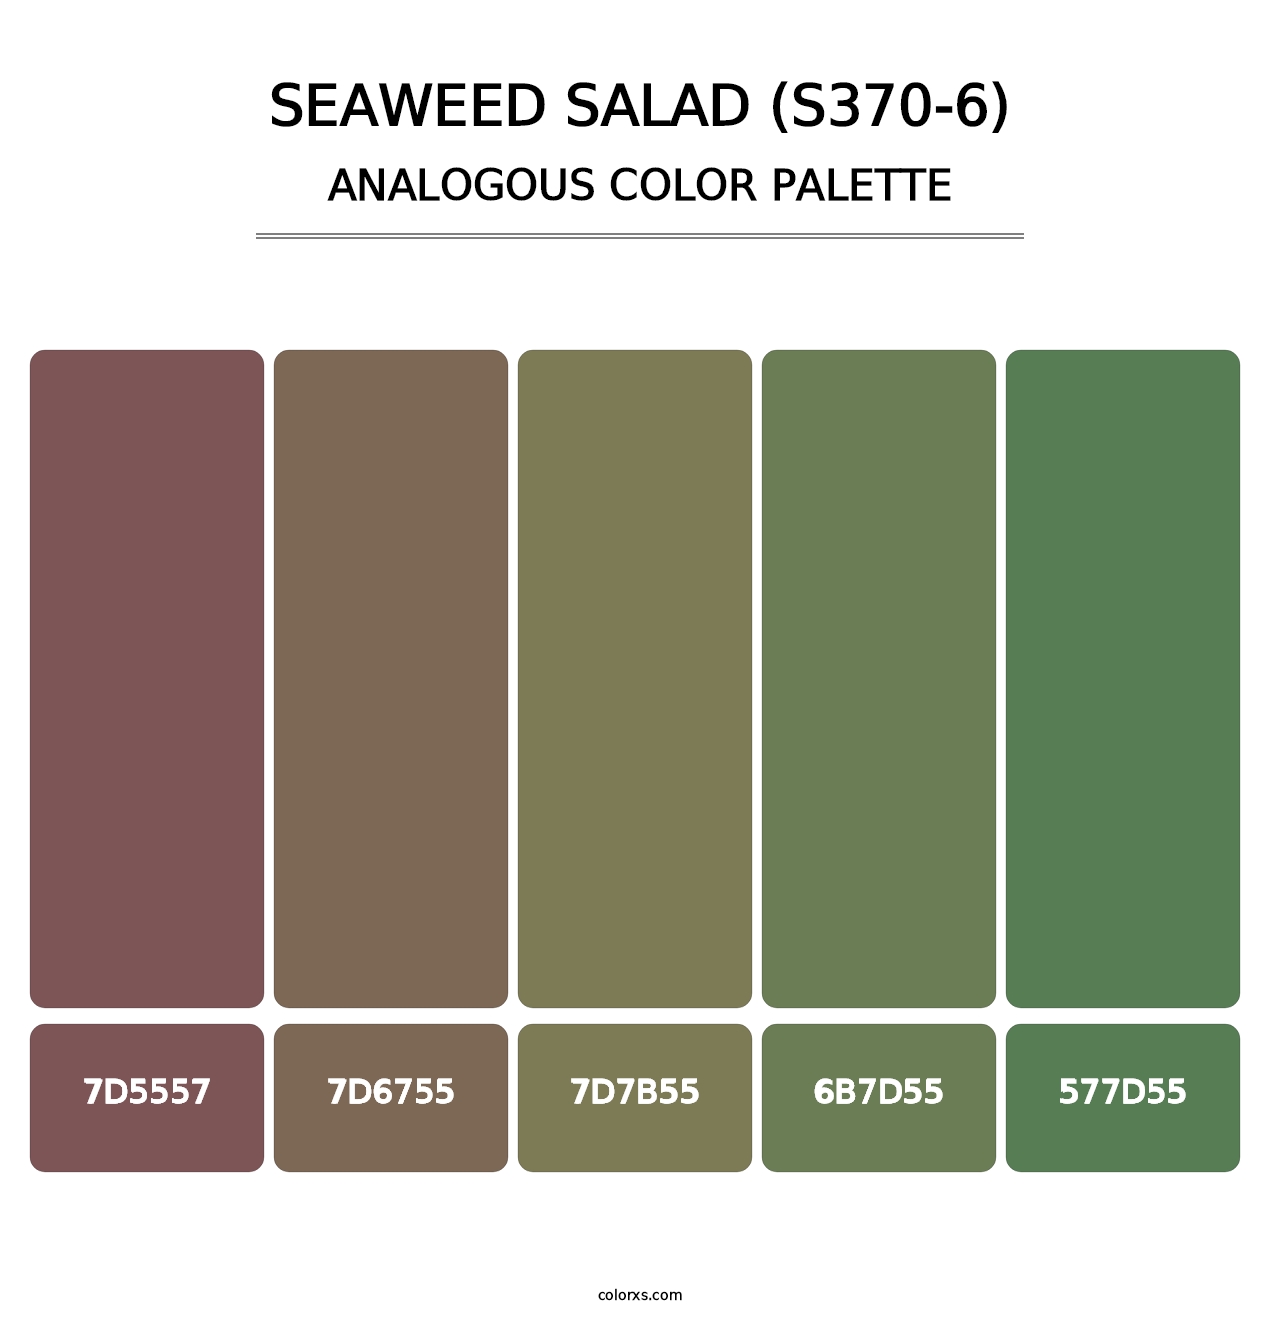 Seaweed Salad (S370-6) - Analogous Color Palette